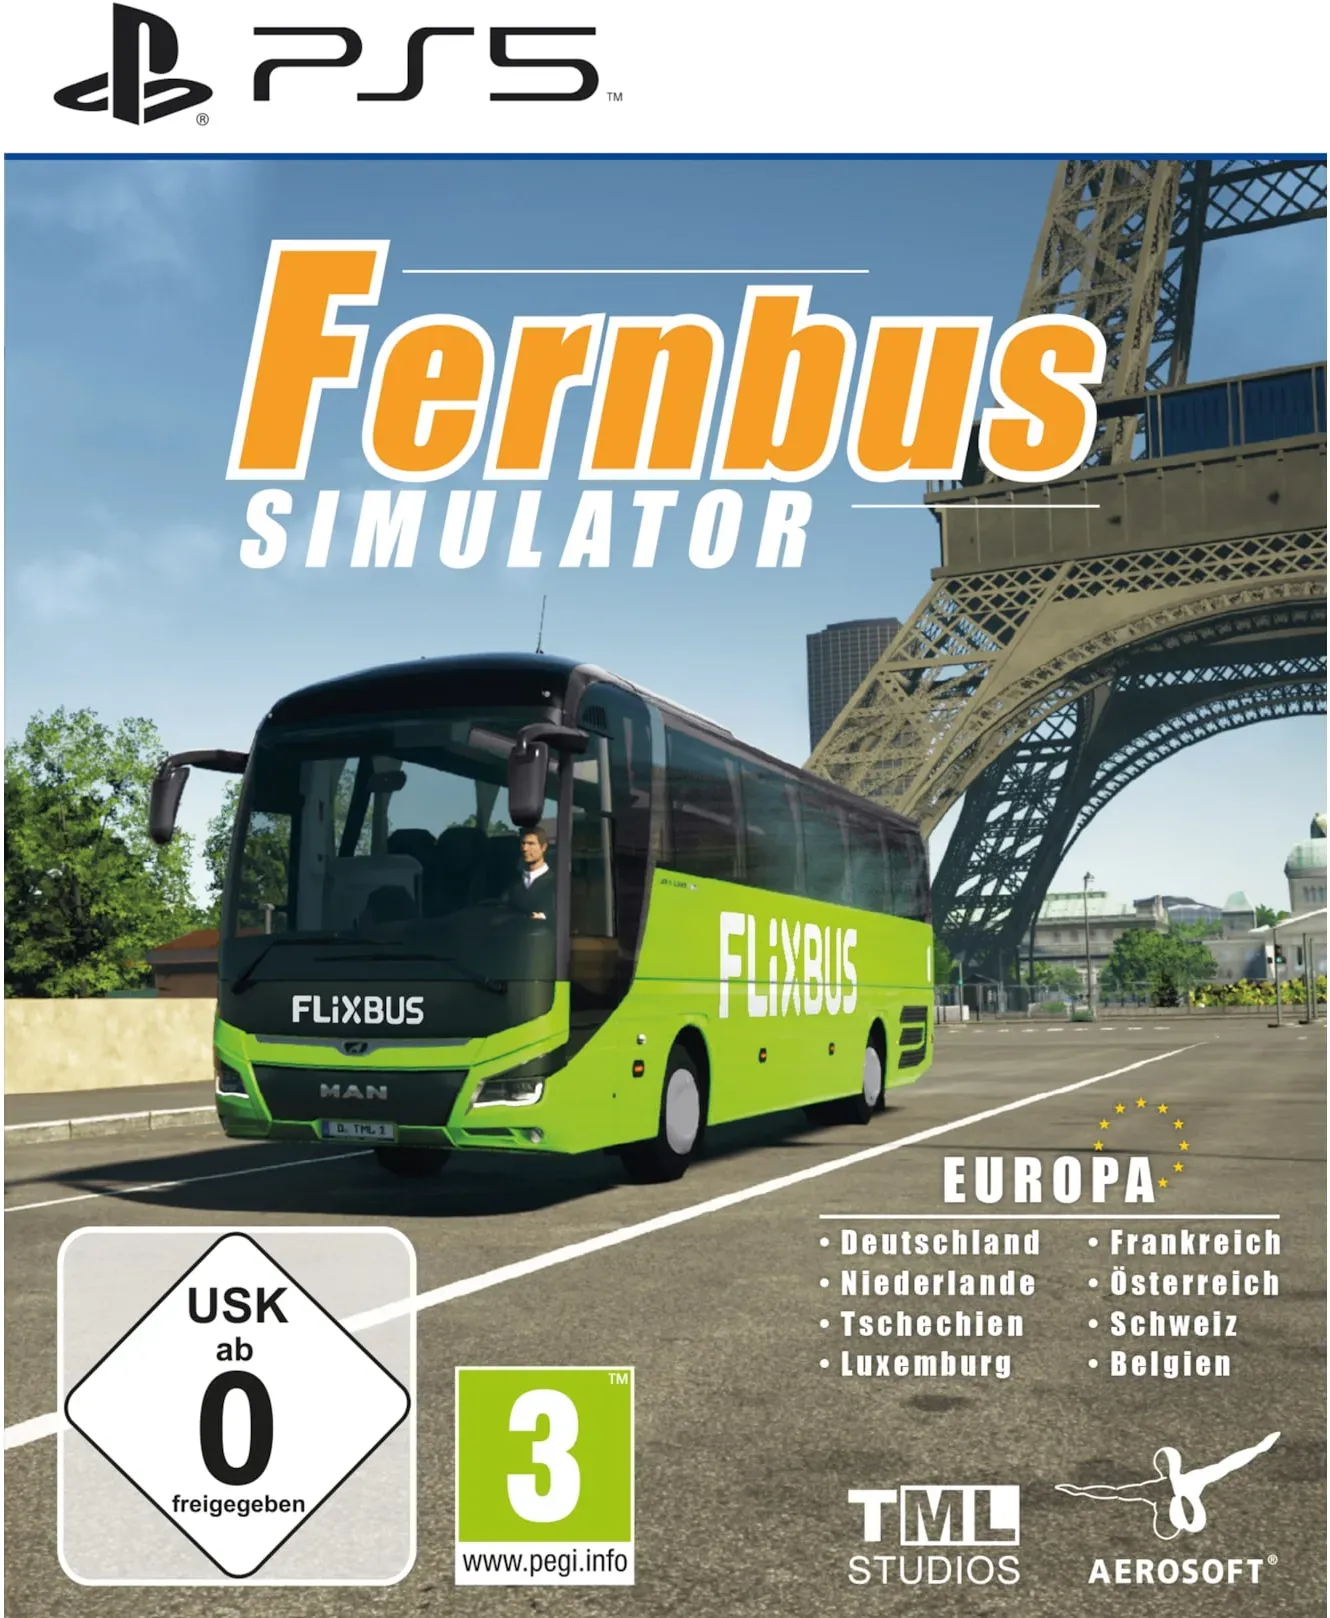 Der Fernbus Simulator